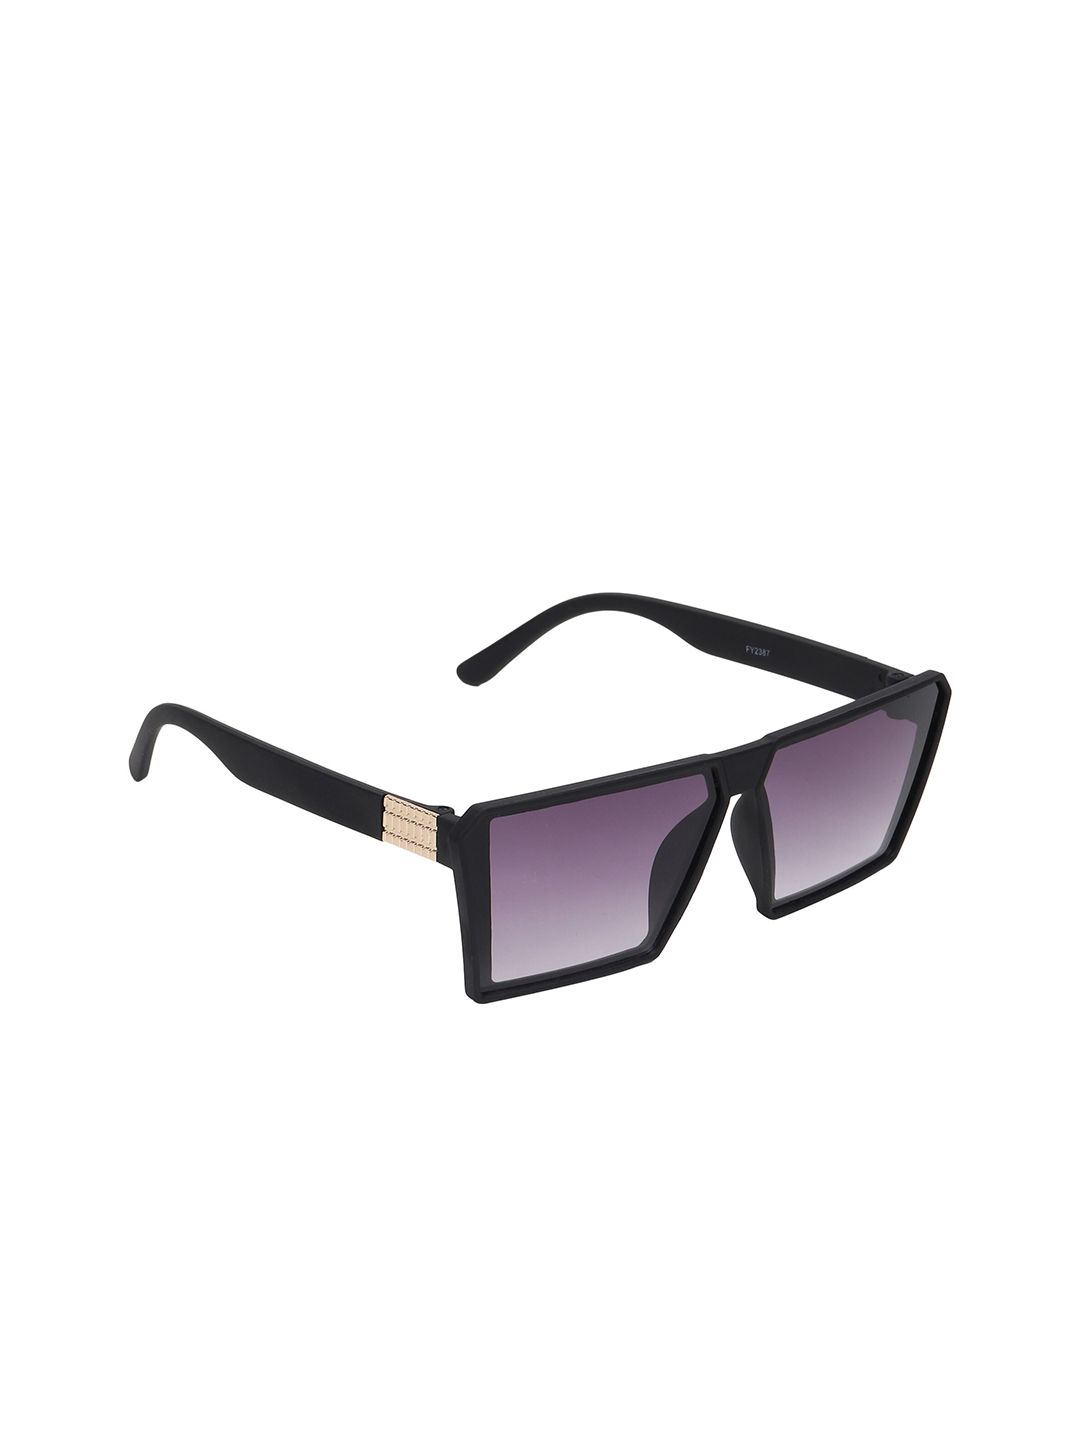 SCAGLIA Unisex Grey Lens & Black Square Sunglasses with UV Protected Lens SCG_CROATIA-GREY Price in India